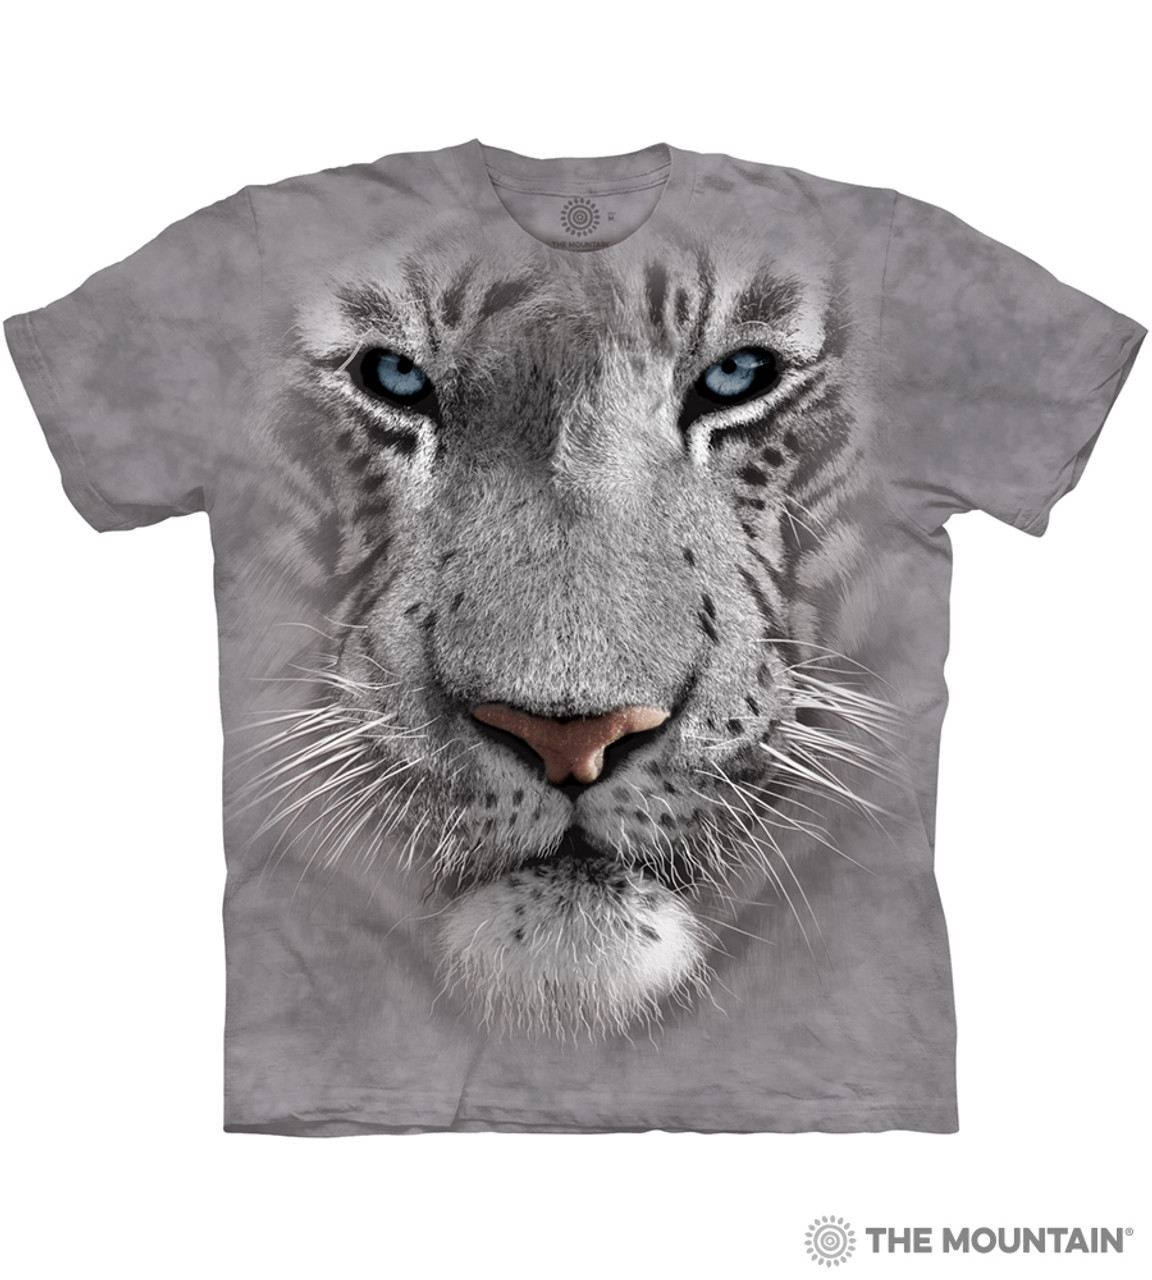 white tiger t shirt